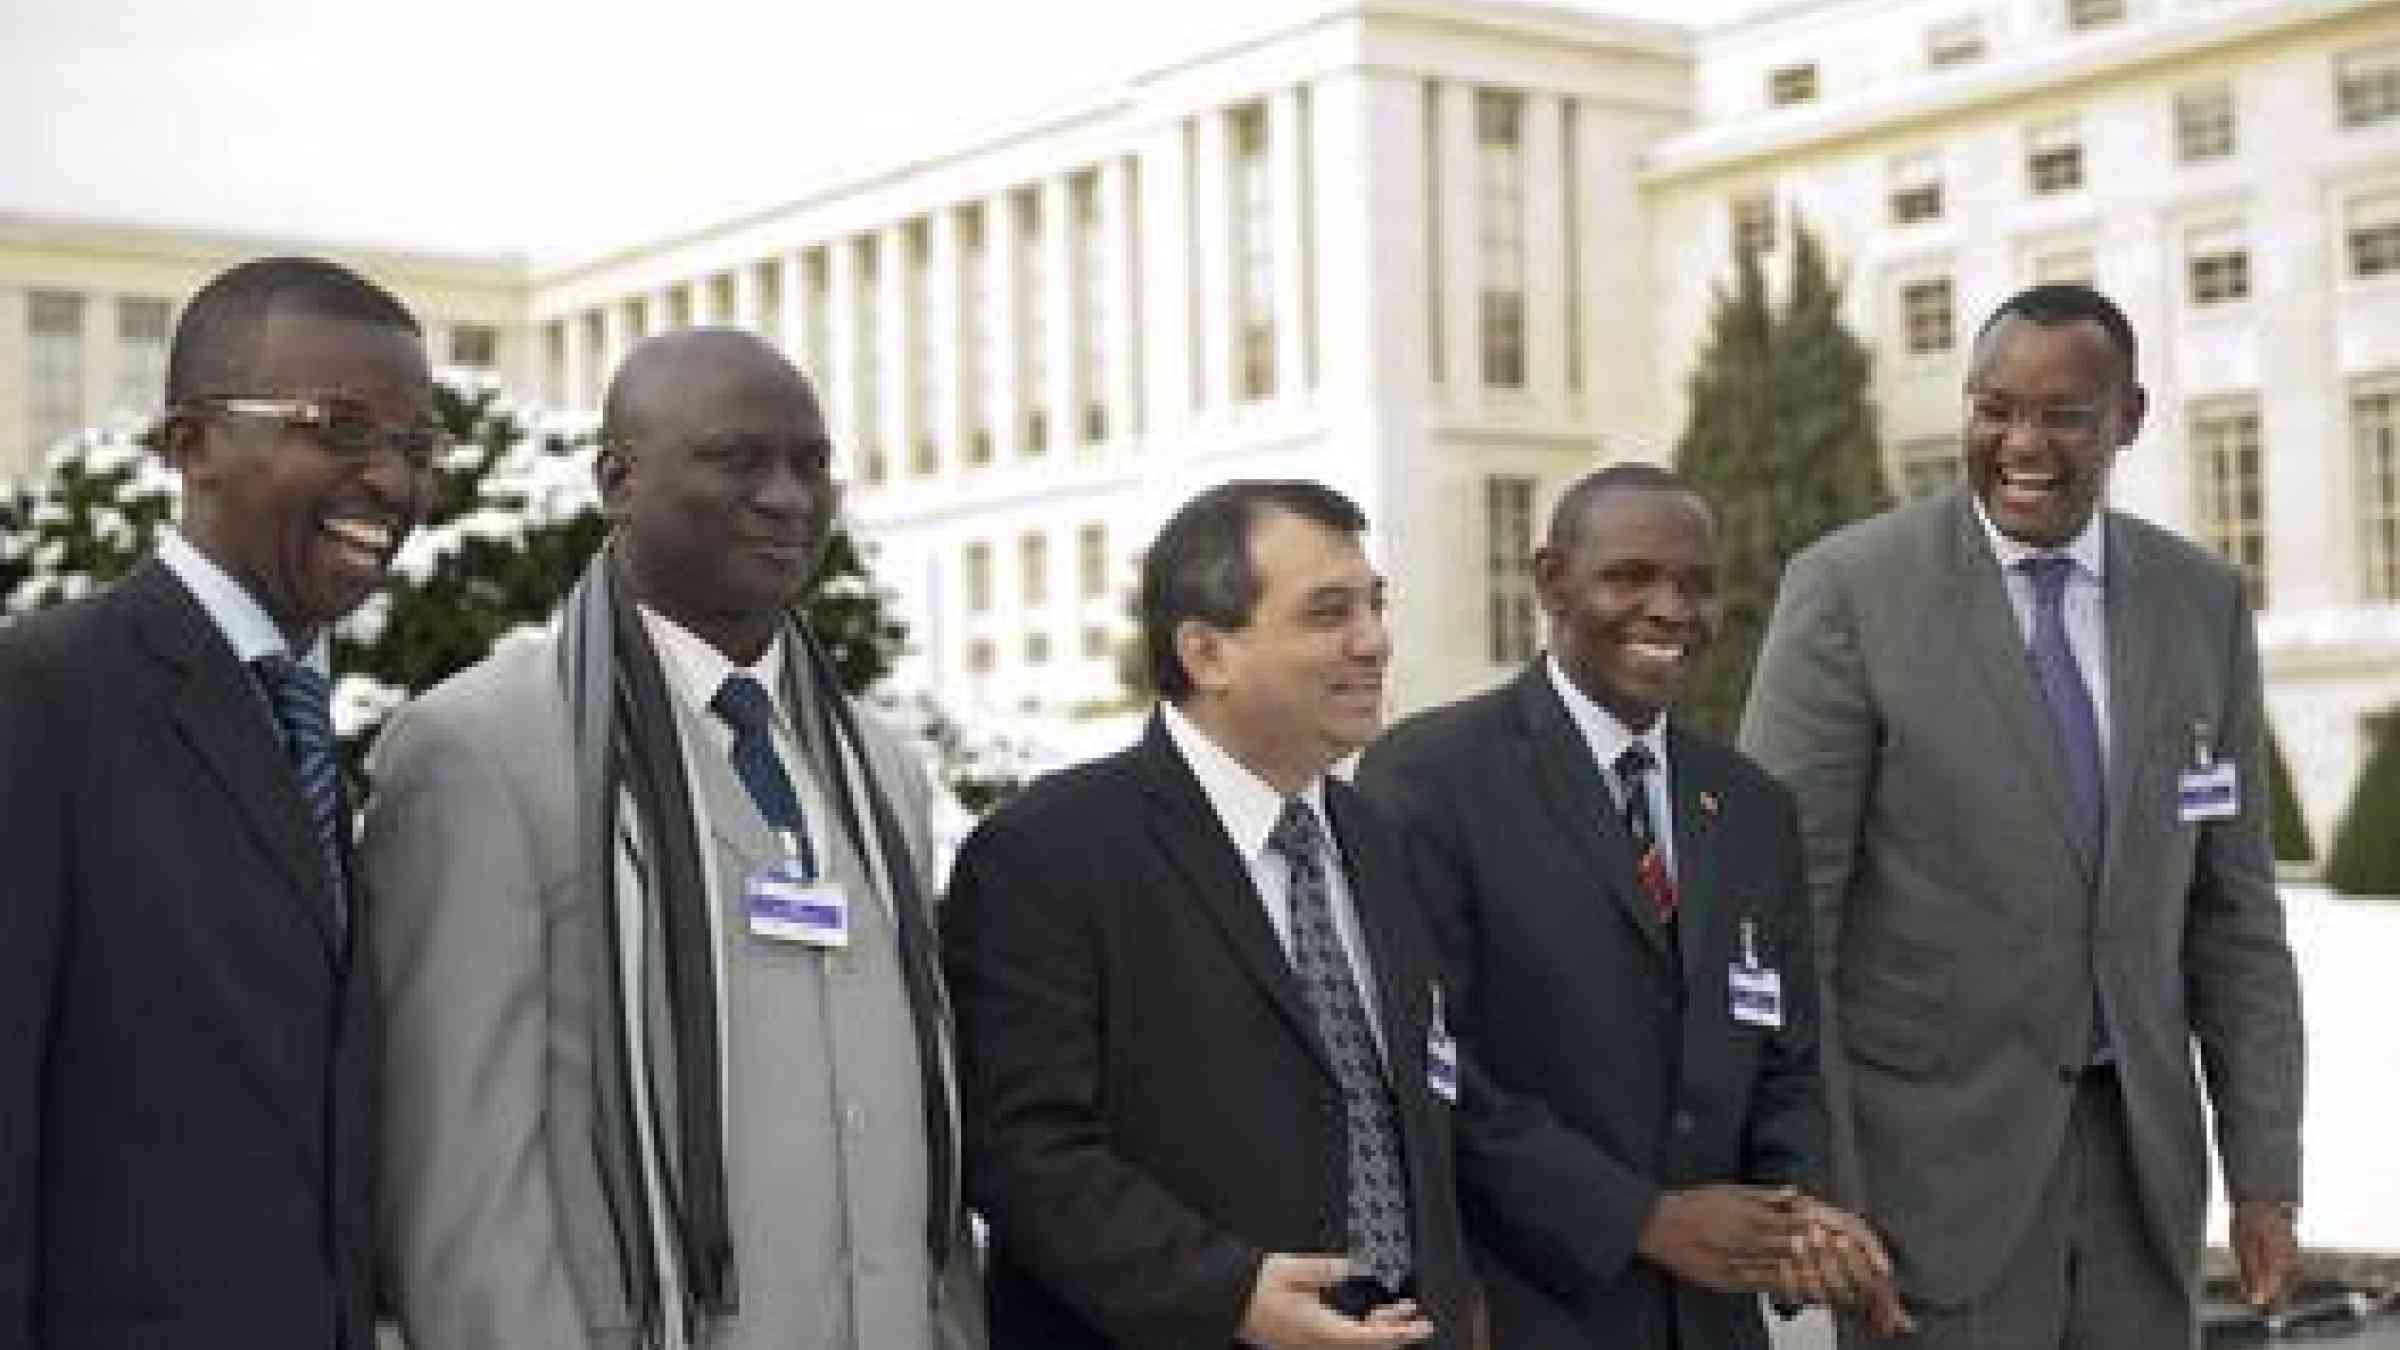 From left to right: Bobi Odiko, East African Legislative Assembly; Abdou Sane, Senegal; Saber Chowdhury, Bangladesh; Alex Byarugaba, Uganda; and Abdirahim H.Abdi, Speaker of East African Legislative Assembly. Not pictured: Saumura Tioulong, Cambodia.